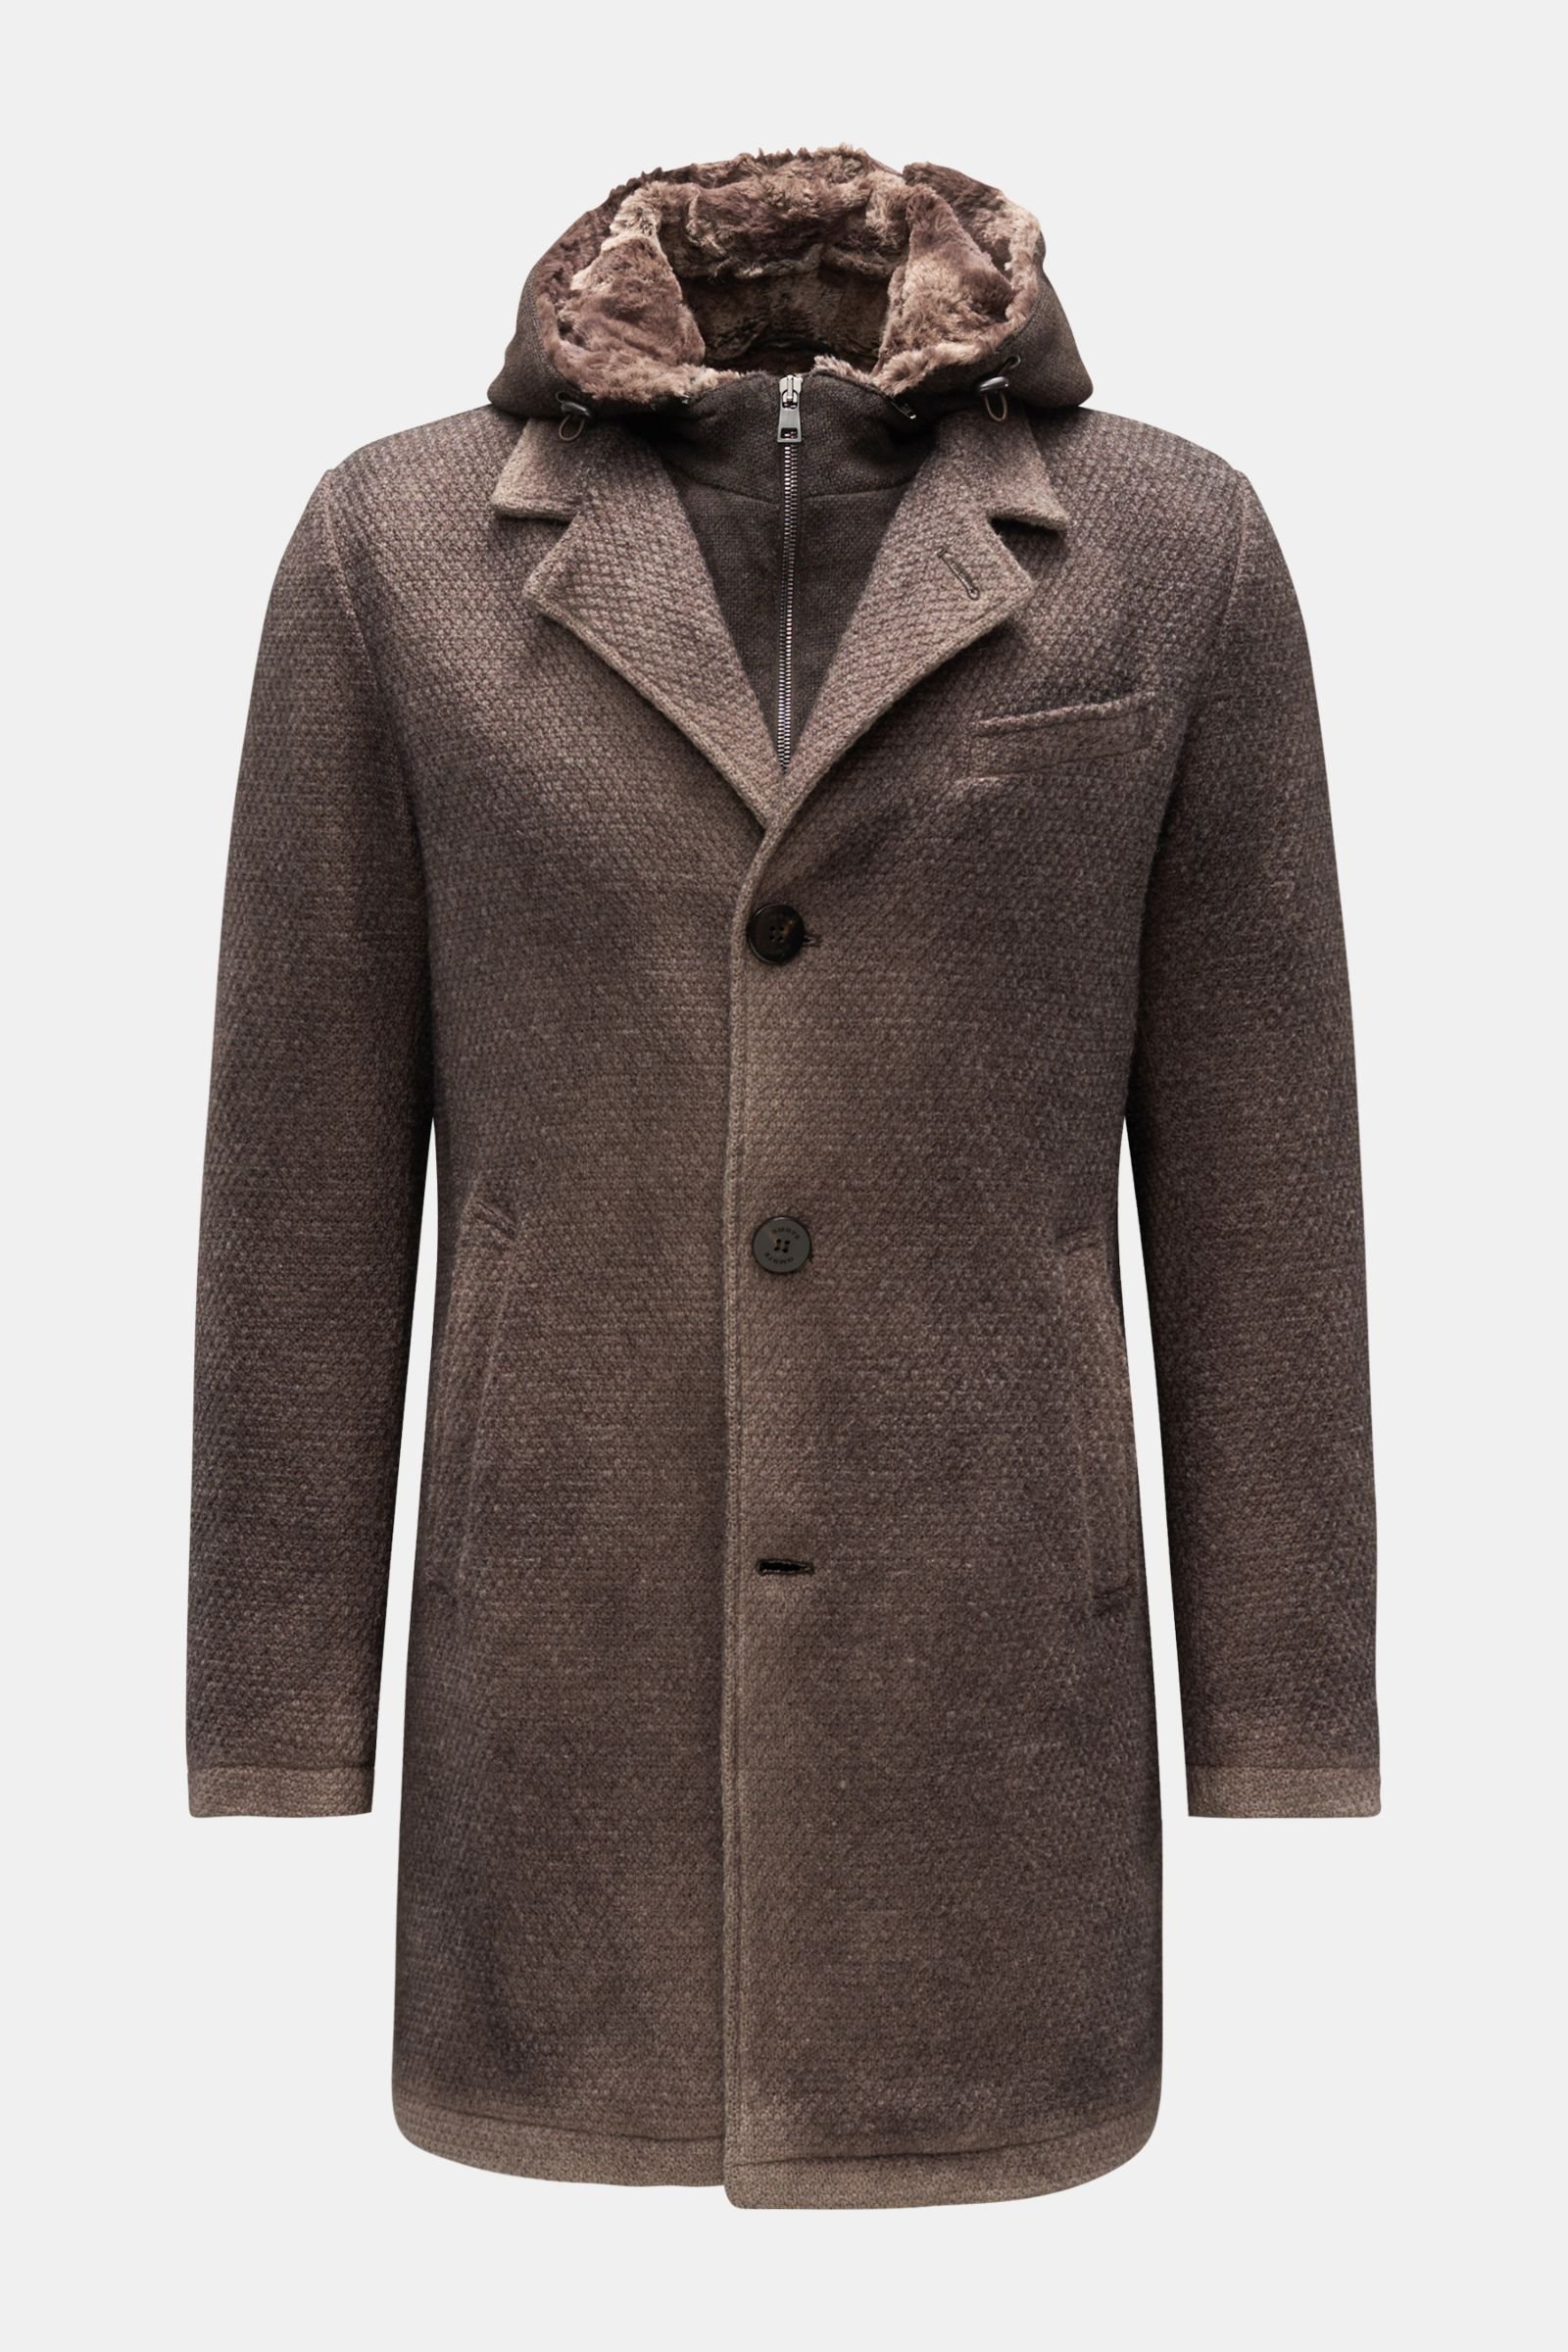 Short coat grey-brown